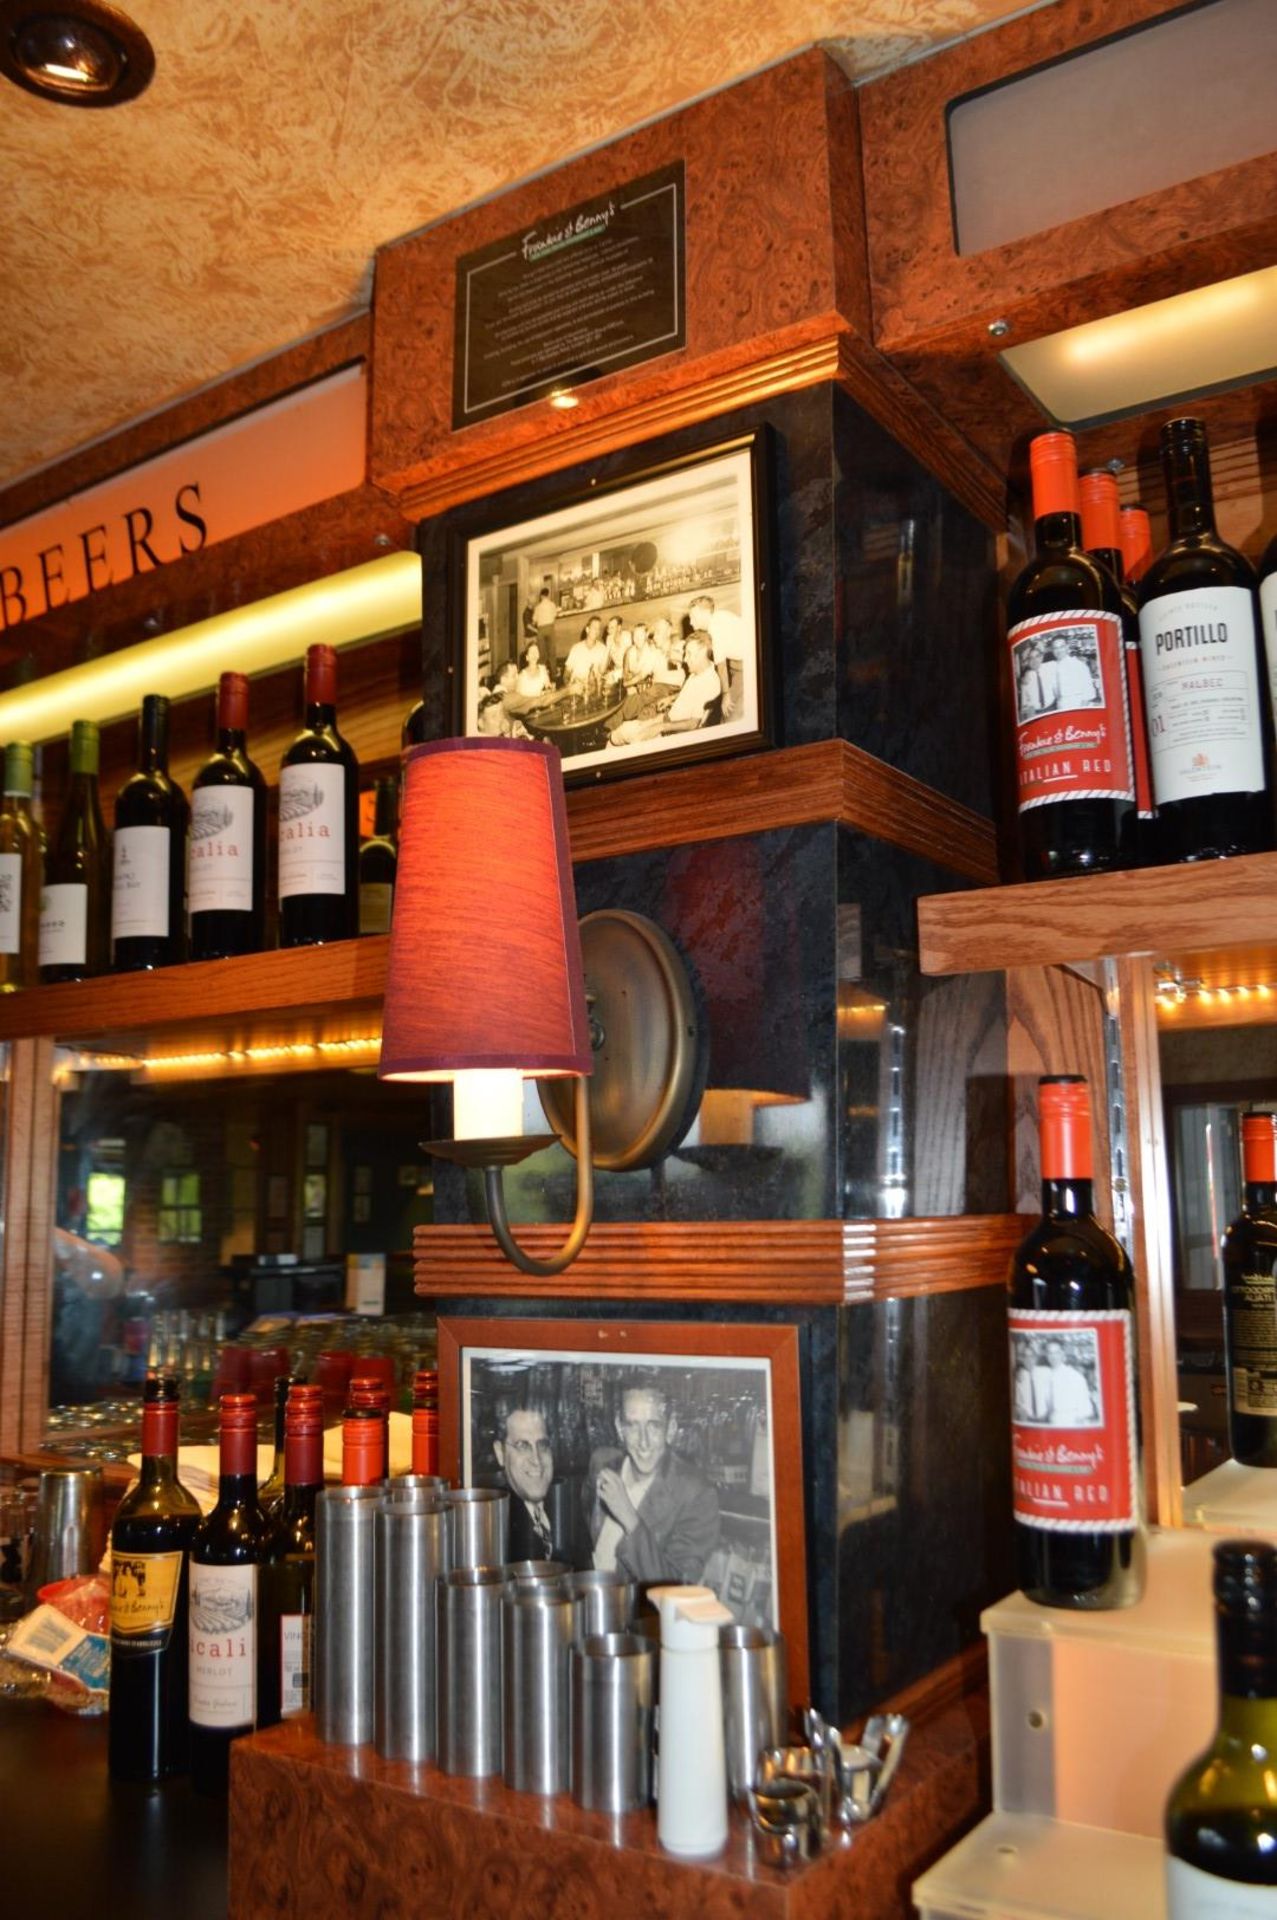 1 x Restaurant / Pub Bar and Backbar From American Diner Themed Restaurant - Burr Walnut and Black - Image 37 of 47